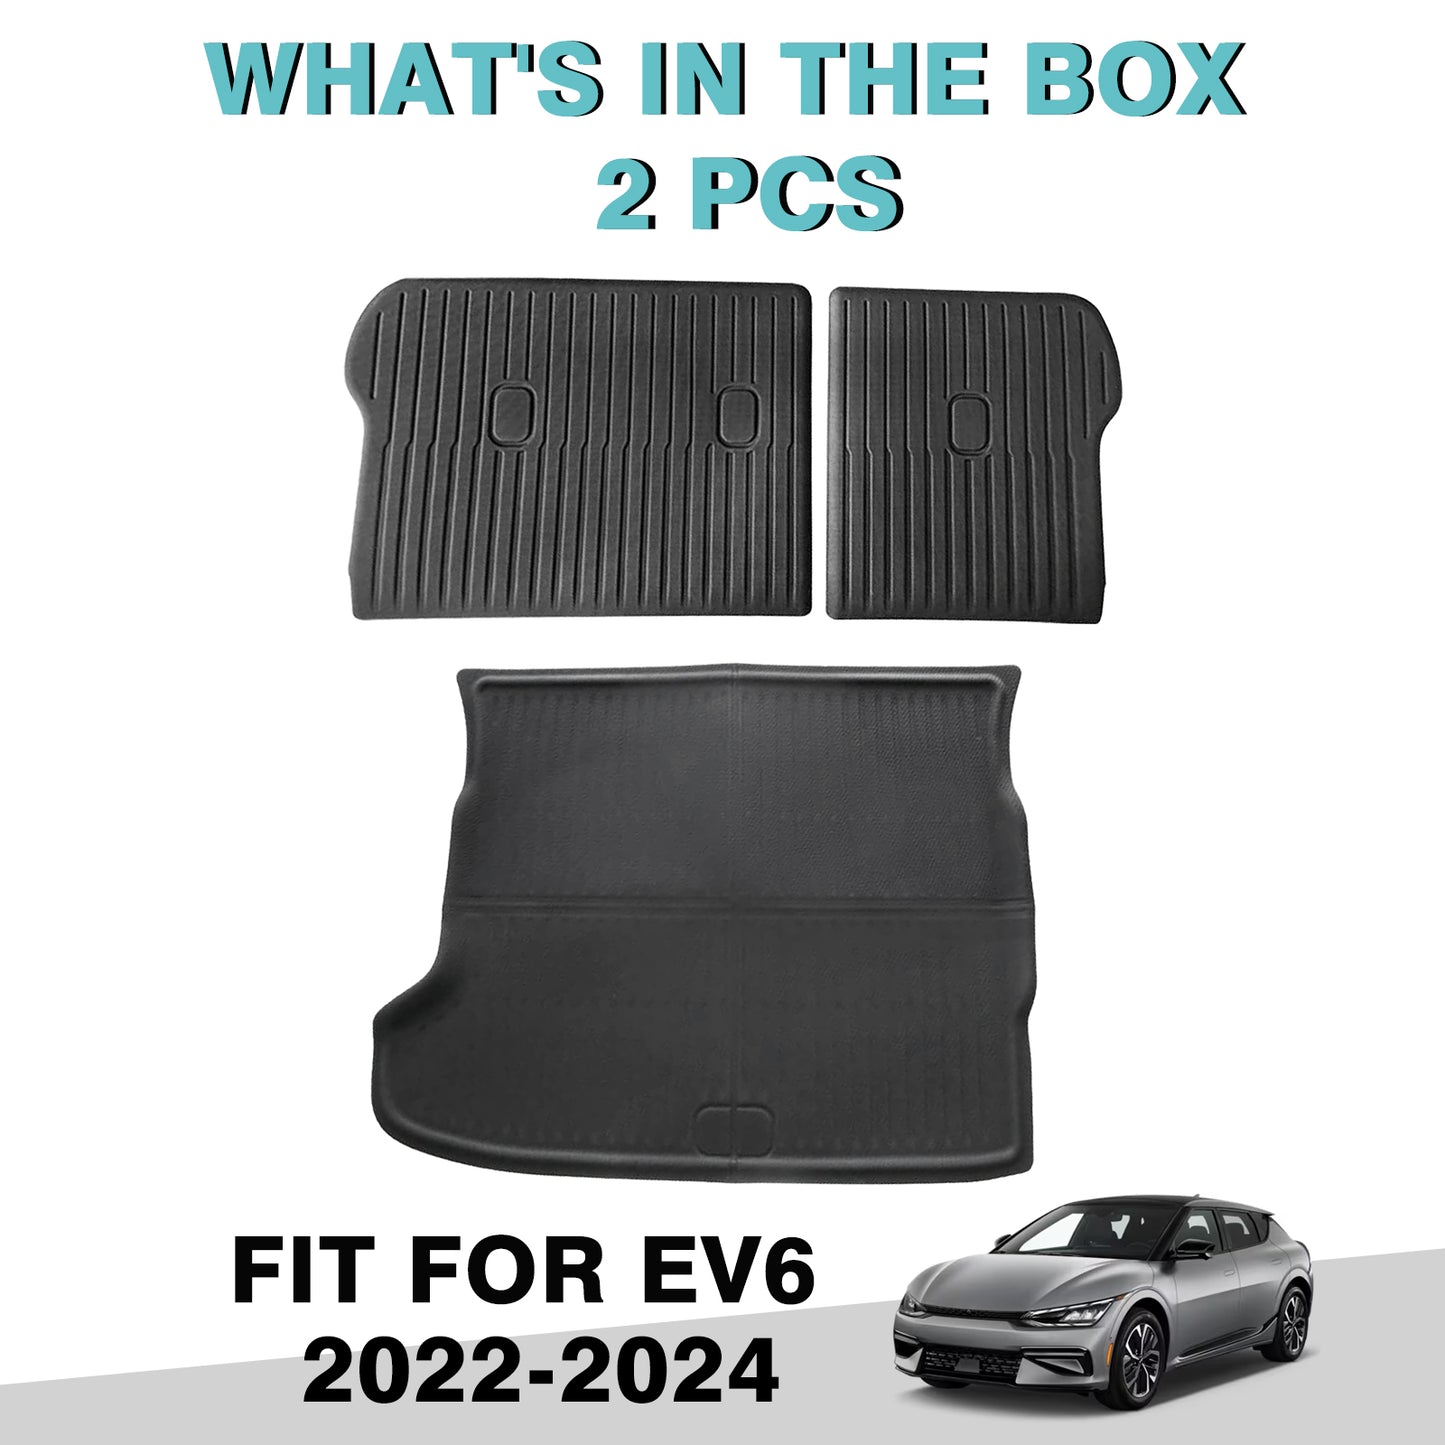 Bundle of EV6 Trunk Mat+Seats Back Cover from BestEvMod